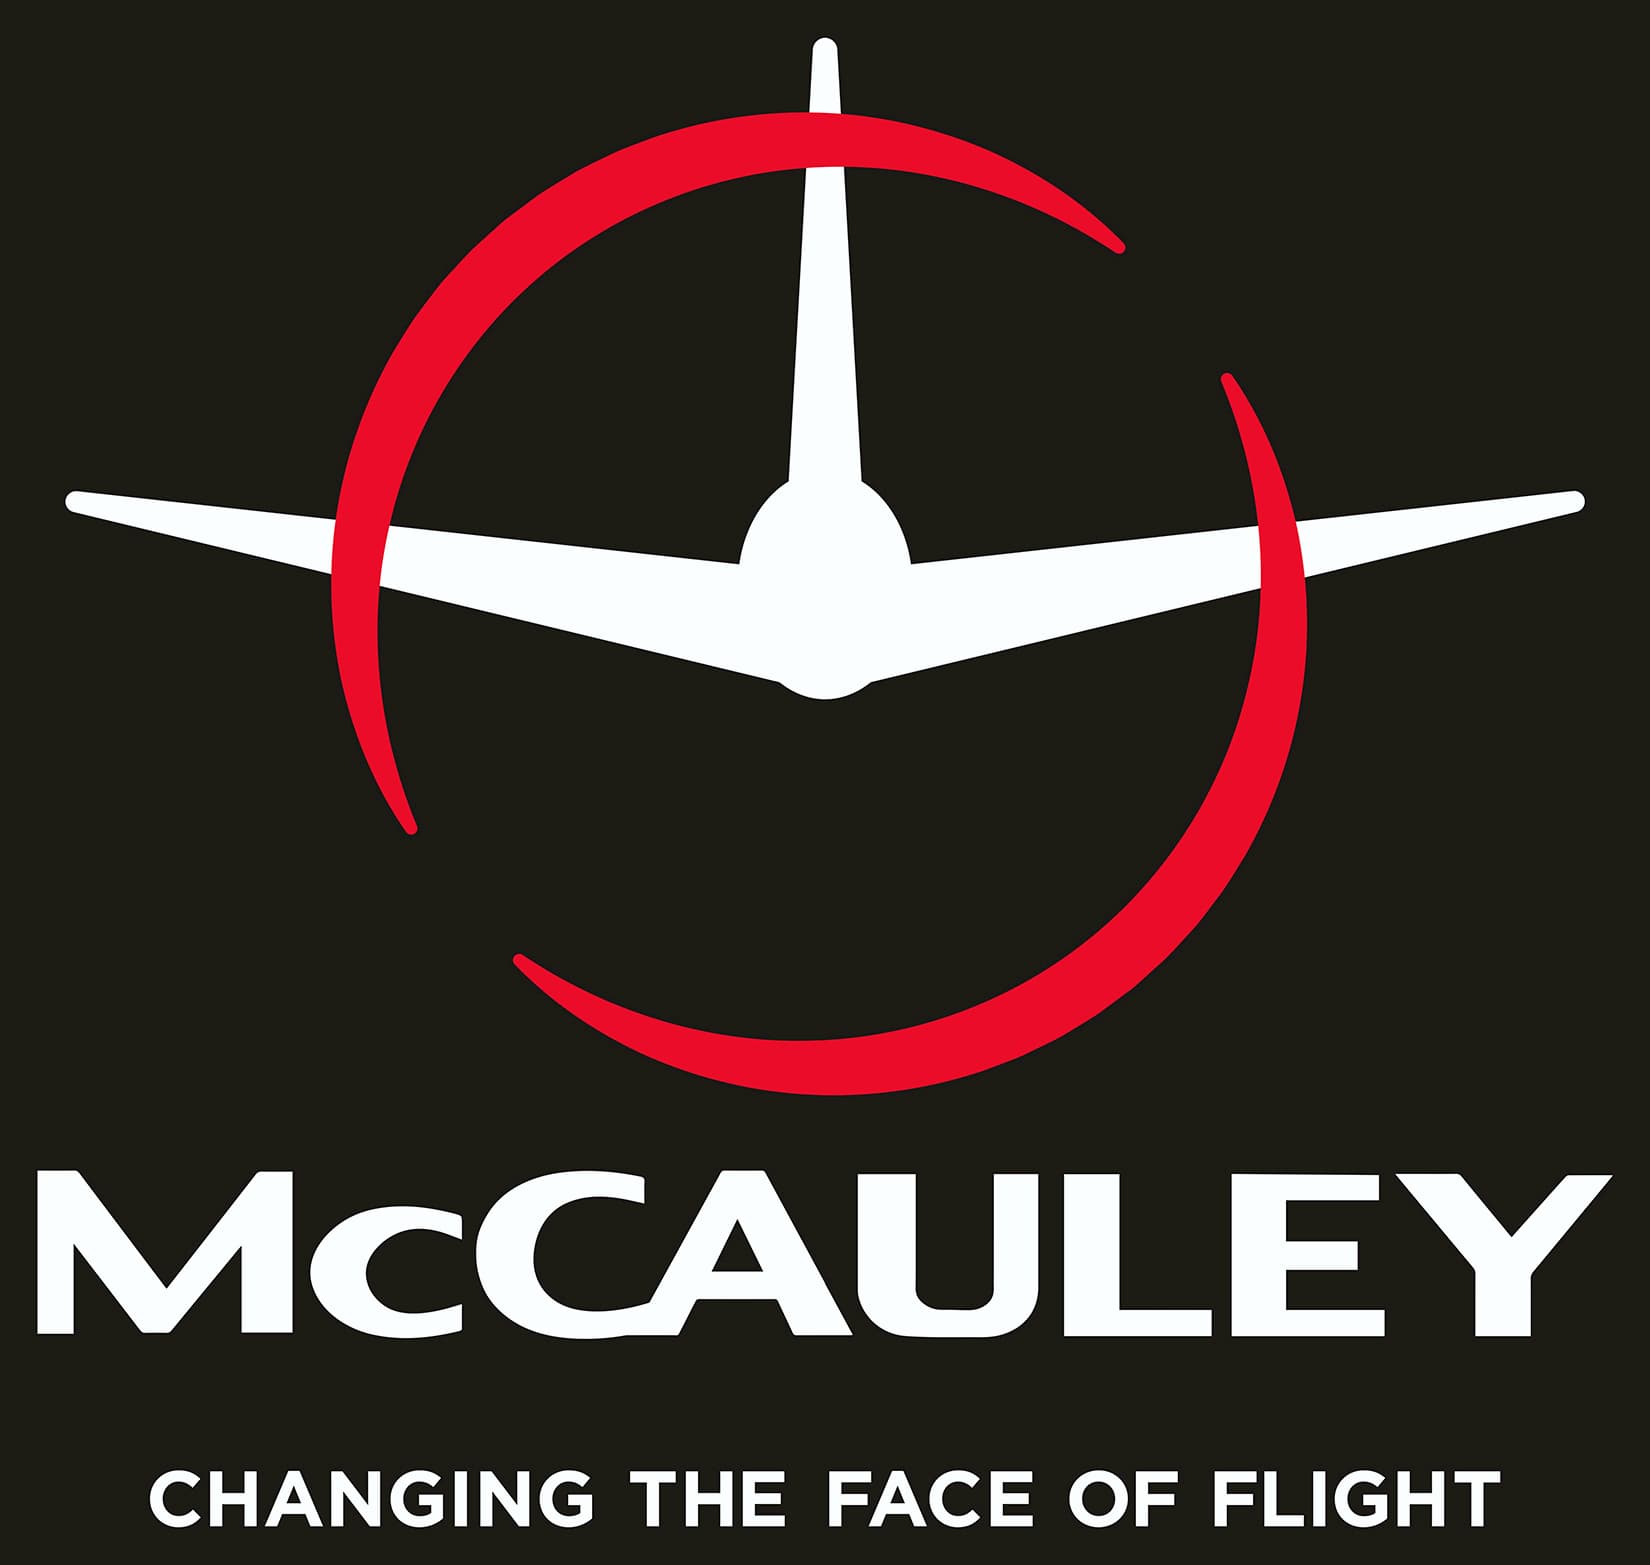 McCauley flying plane logo